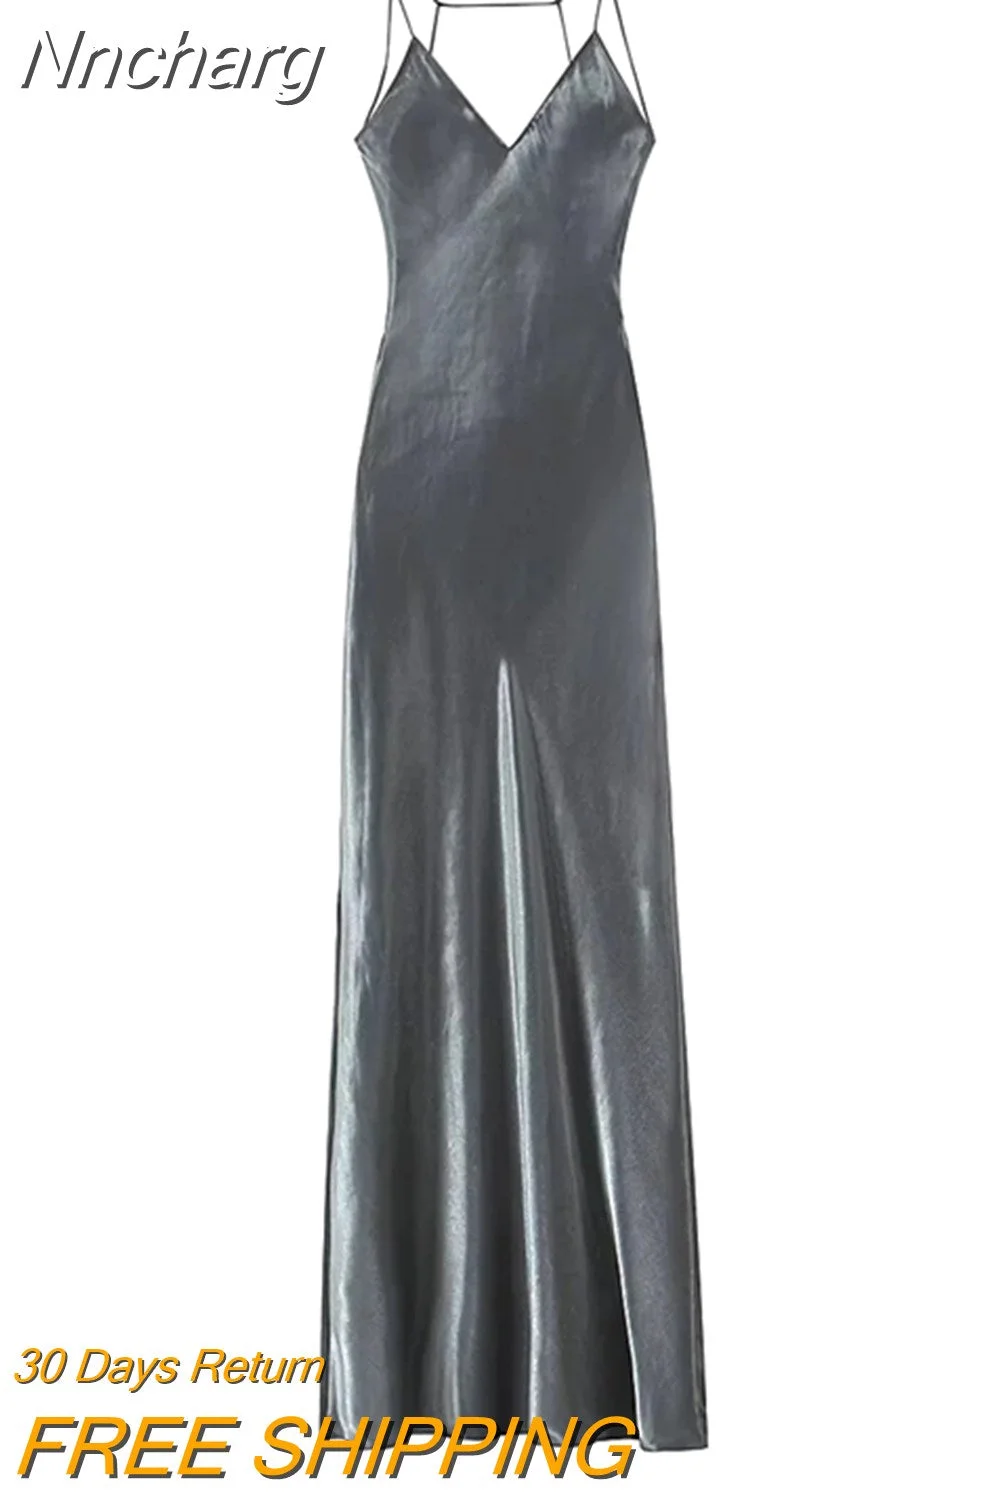 Nncharge TRAF Chic V-neck Women Bodycon Dress Metallic Luxury Dress Back With Zipper Leg Stretch Midi Evening Party Dress Women